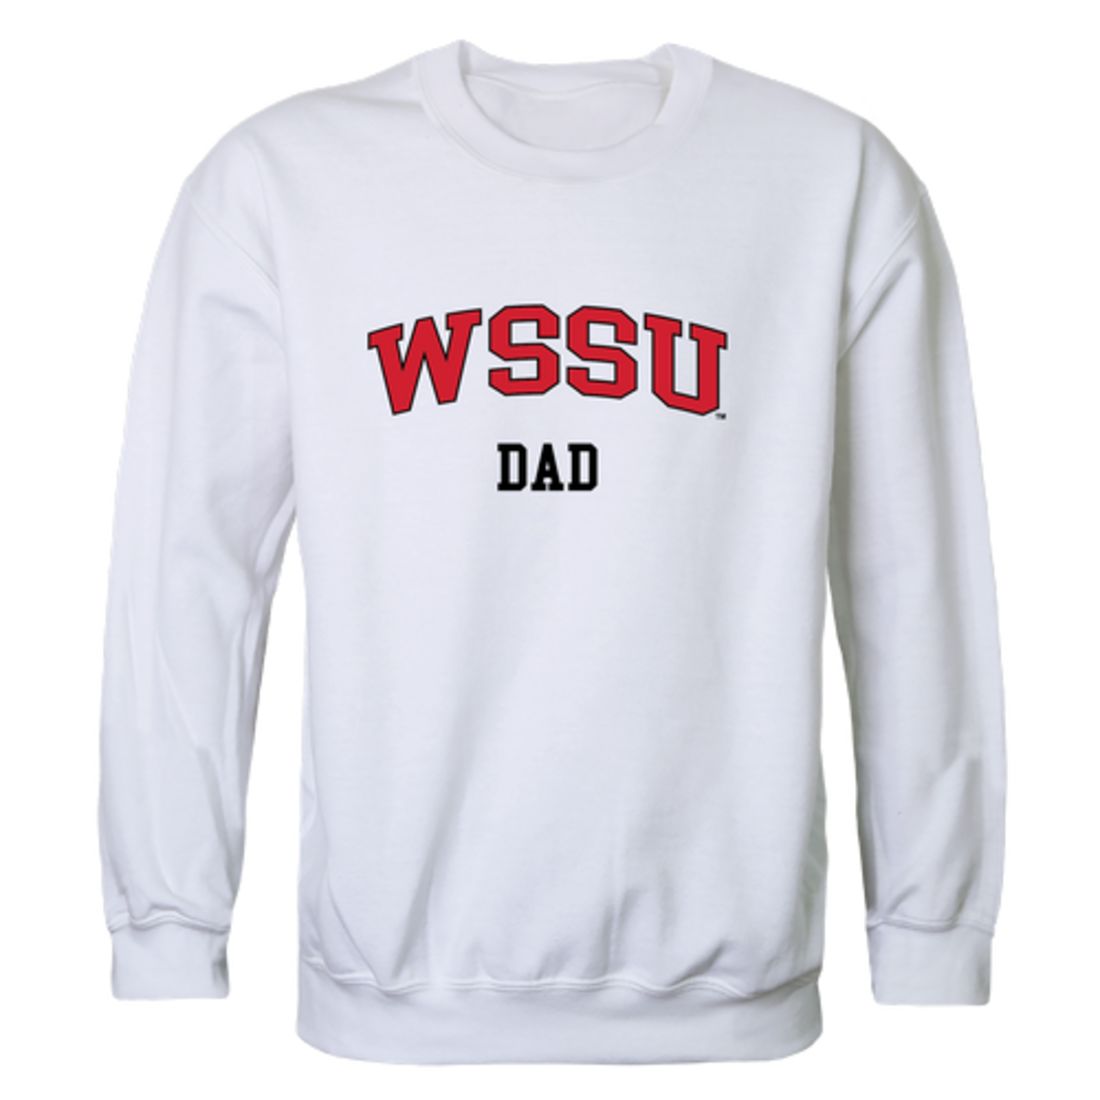 Winston-Salem State University Rams Dad Fleece Crewneck Pullover Sweatshirt